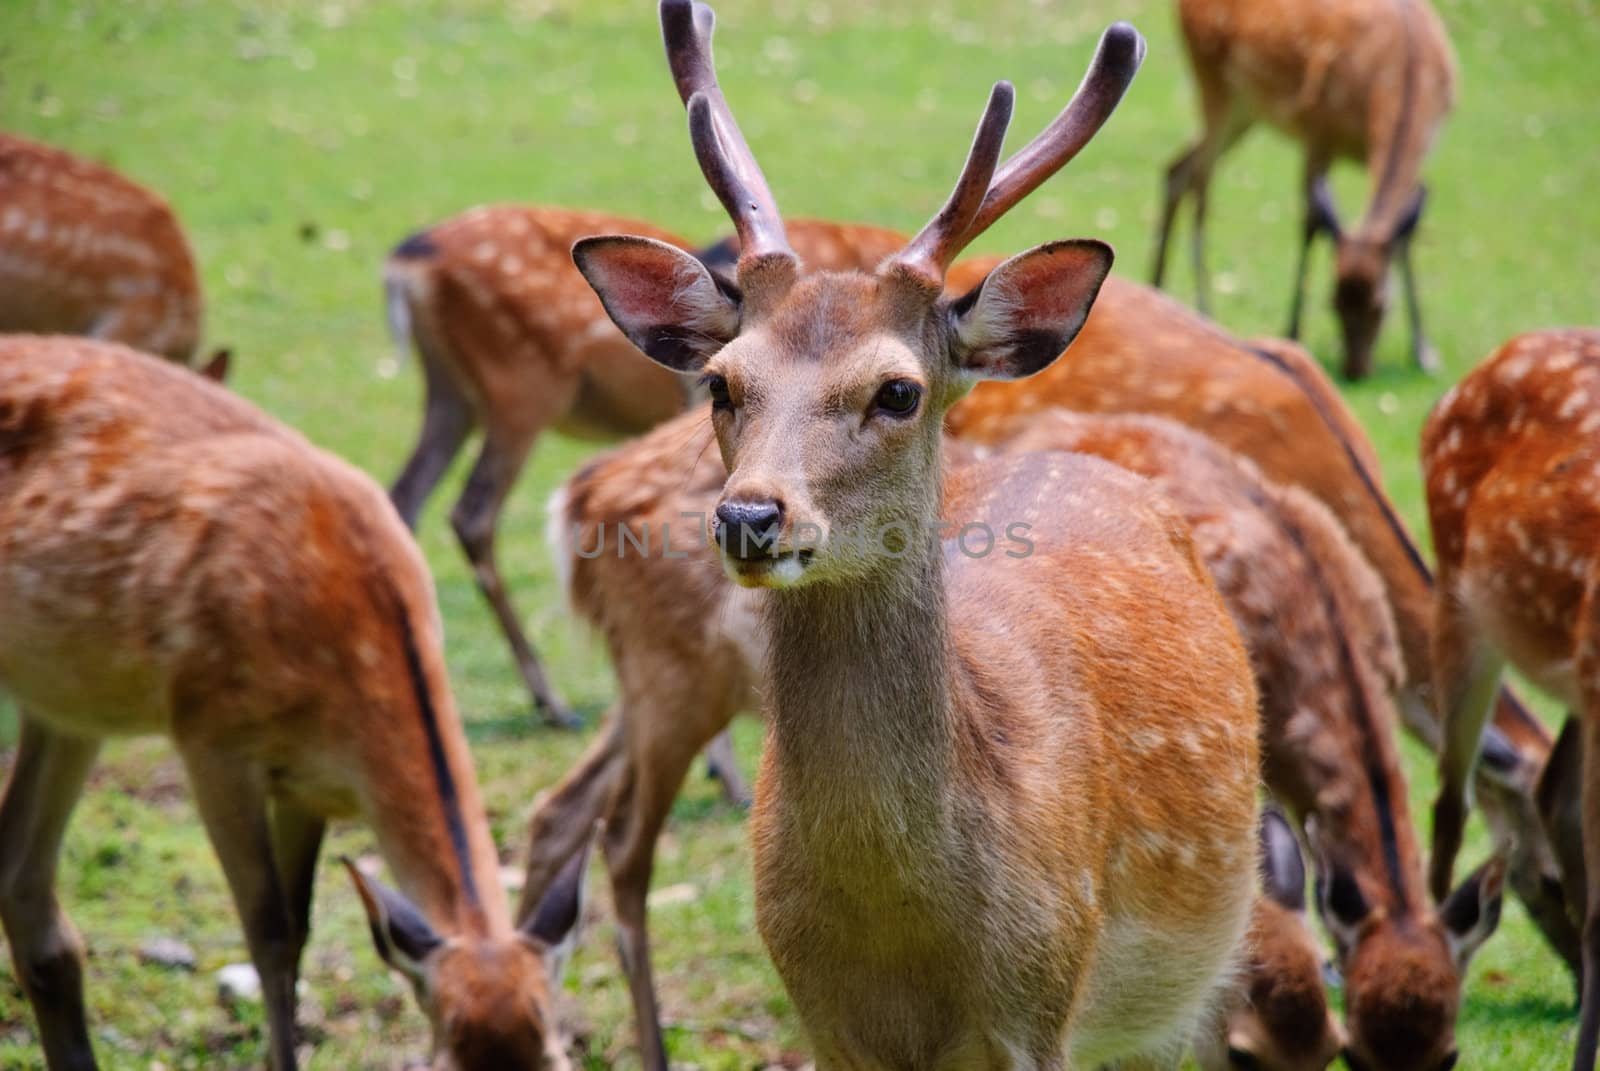 Closeup of a spotted deer in Nara, Japan by 300pixel